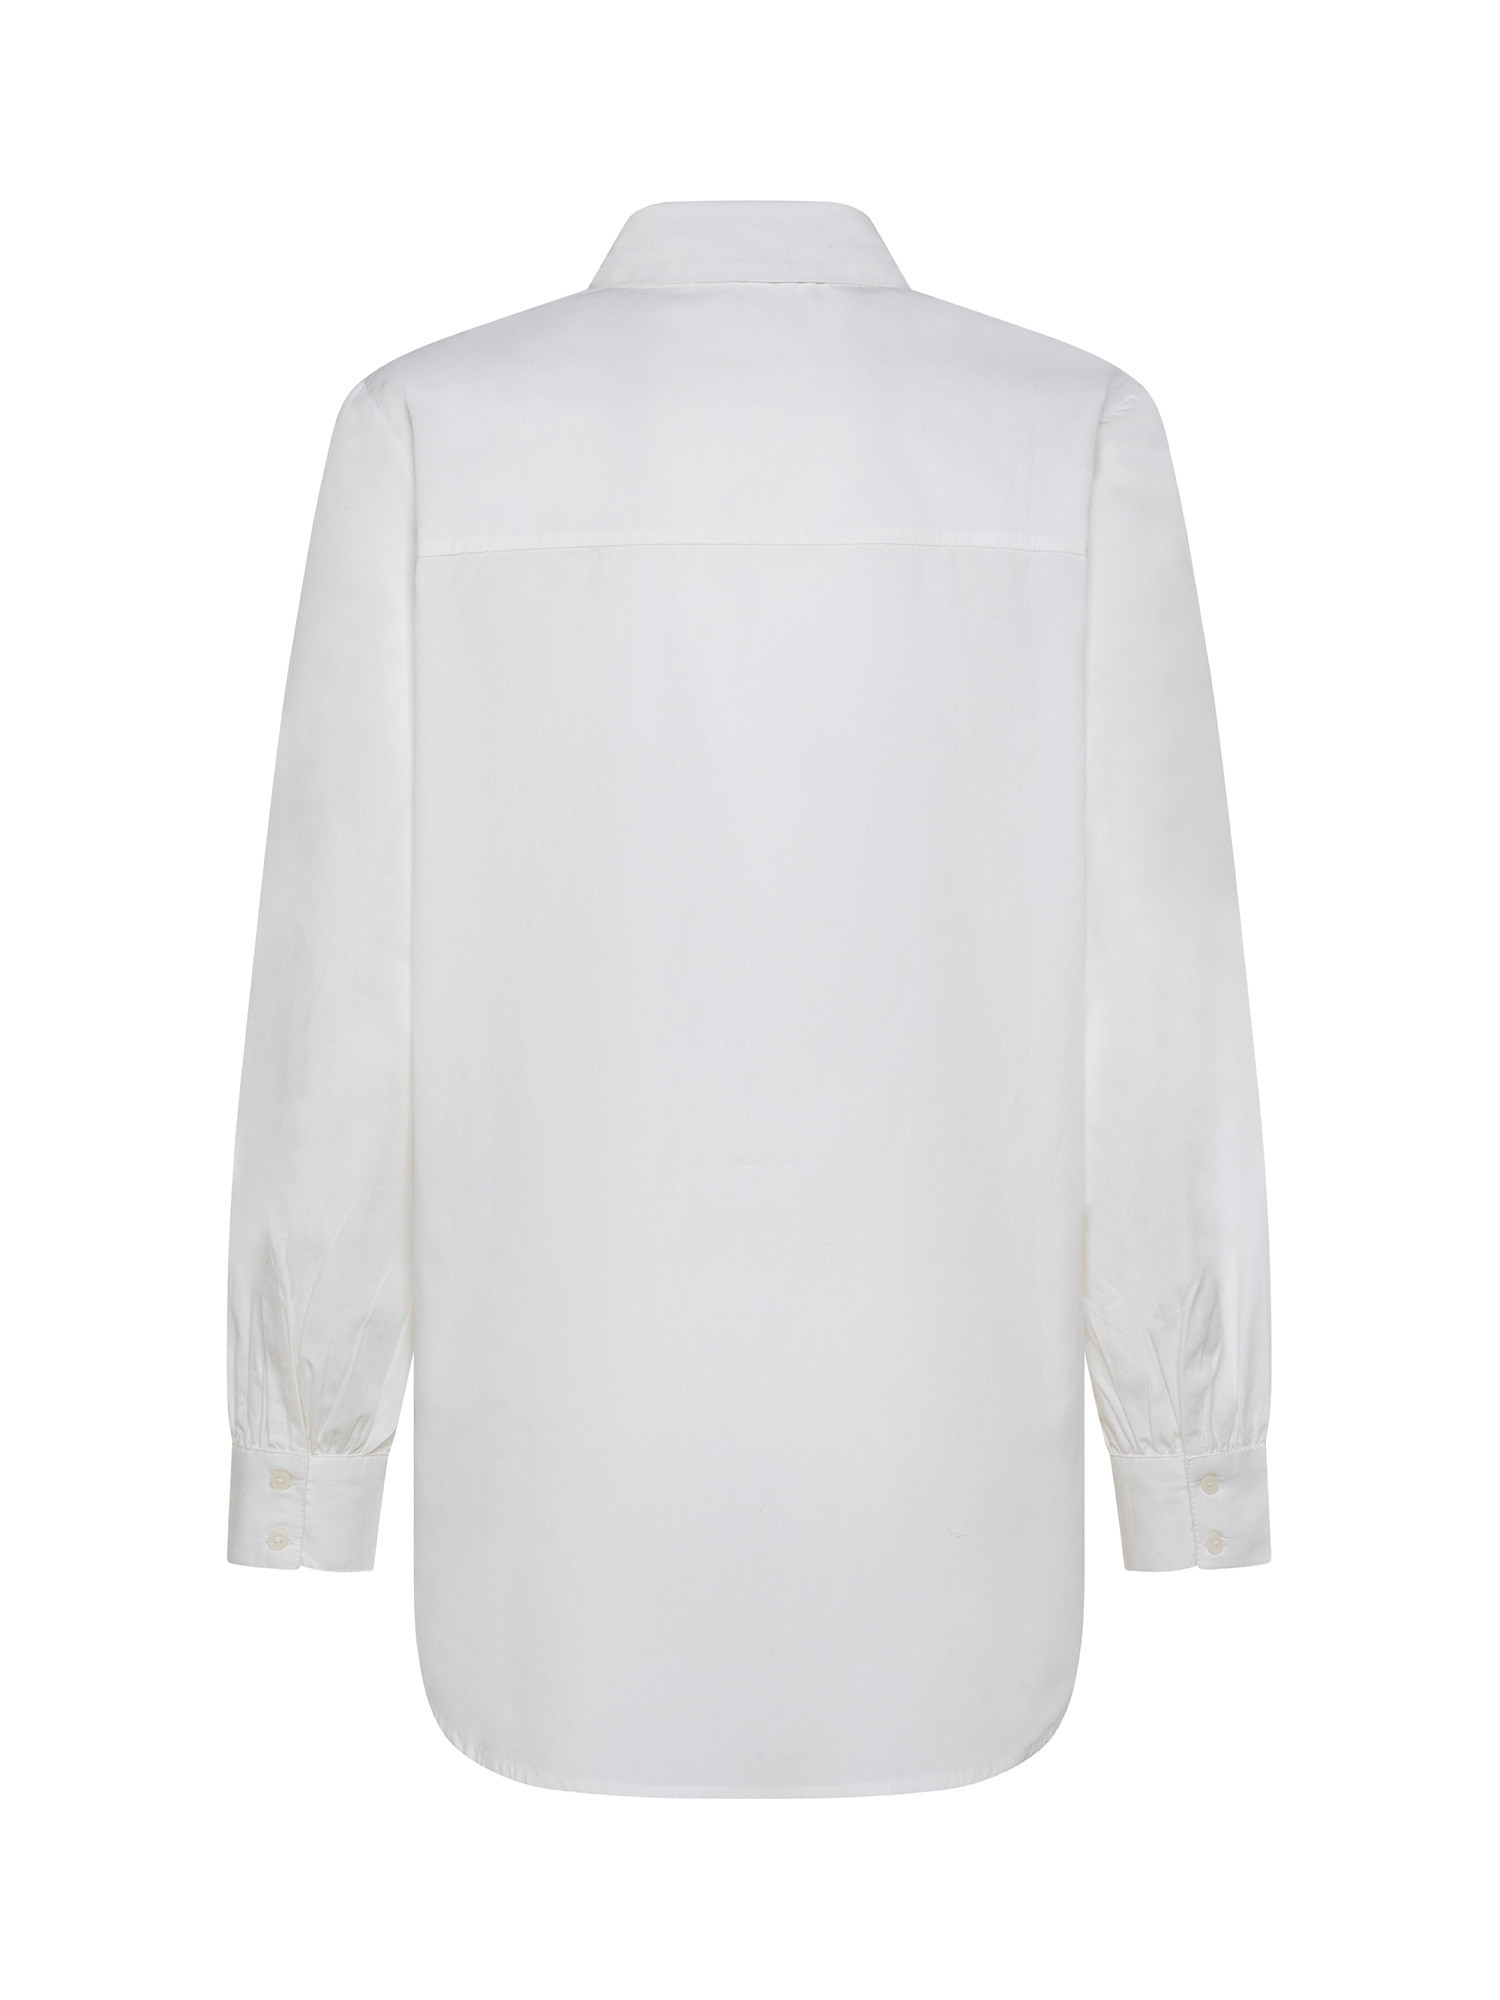 Camicia classica, Bianco, large image number 1